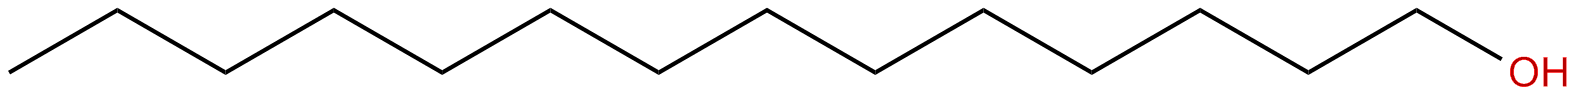 Image of 1-tetradecanol